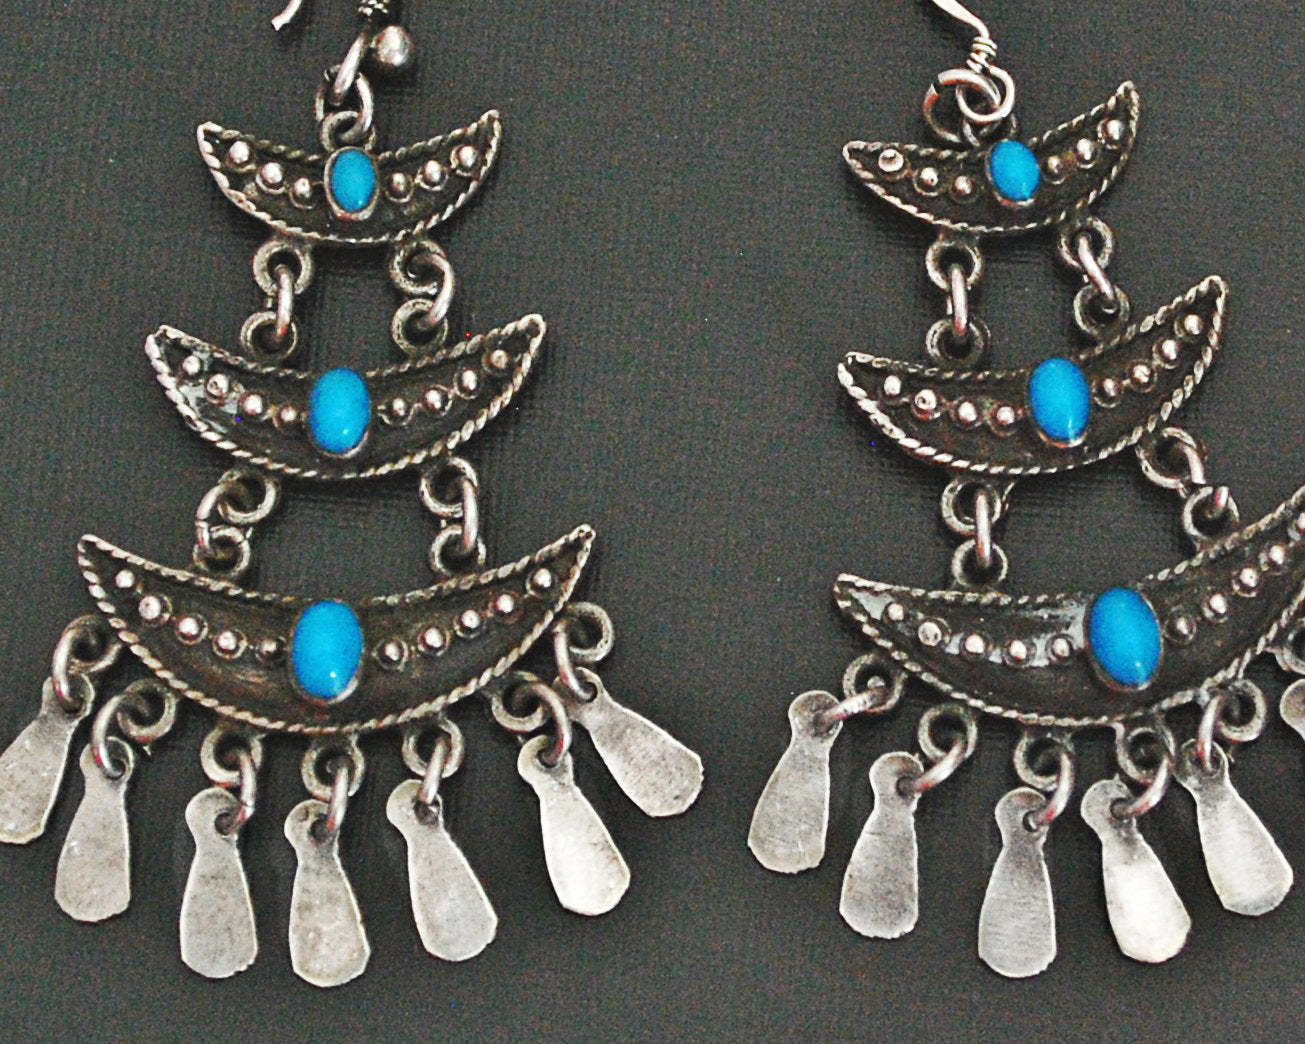 Ethnic Turquoise Earrings with Dangles